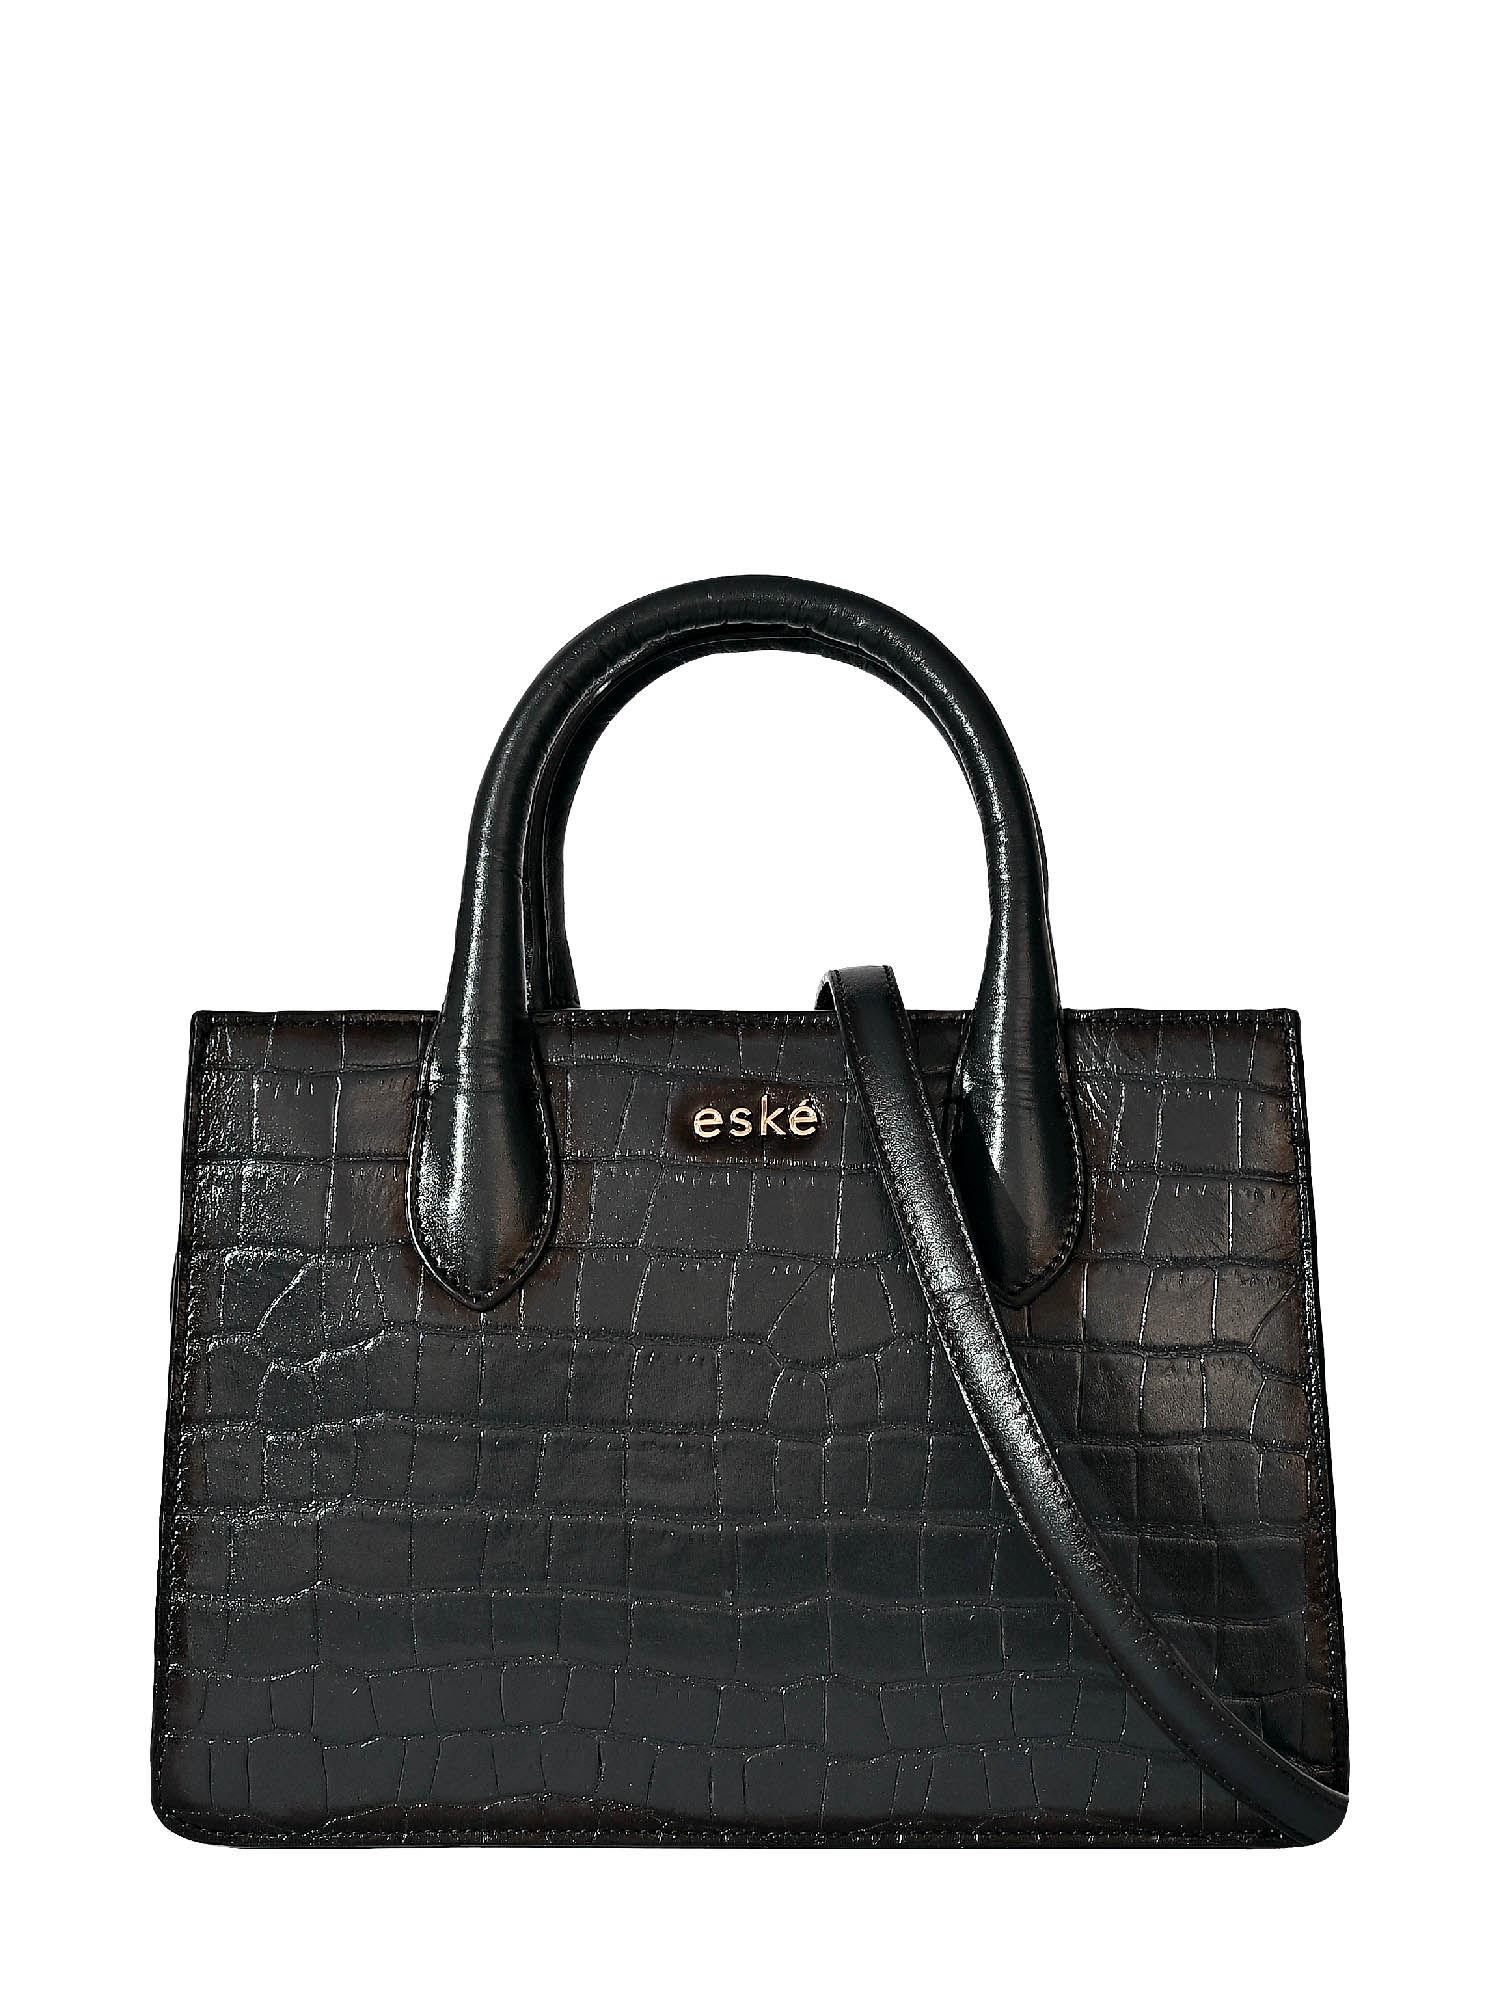 noah genuine leather handbag